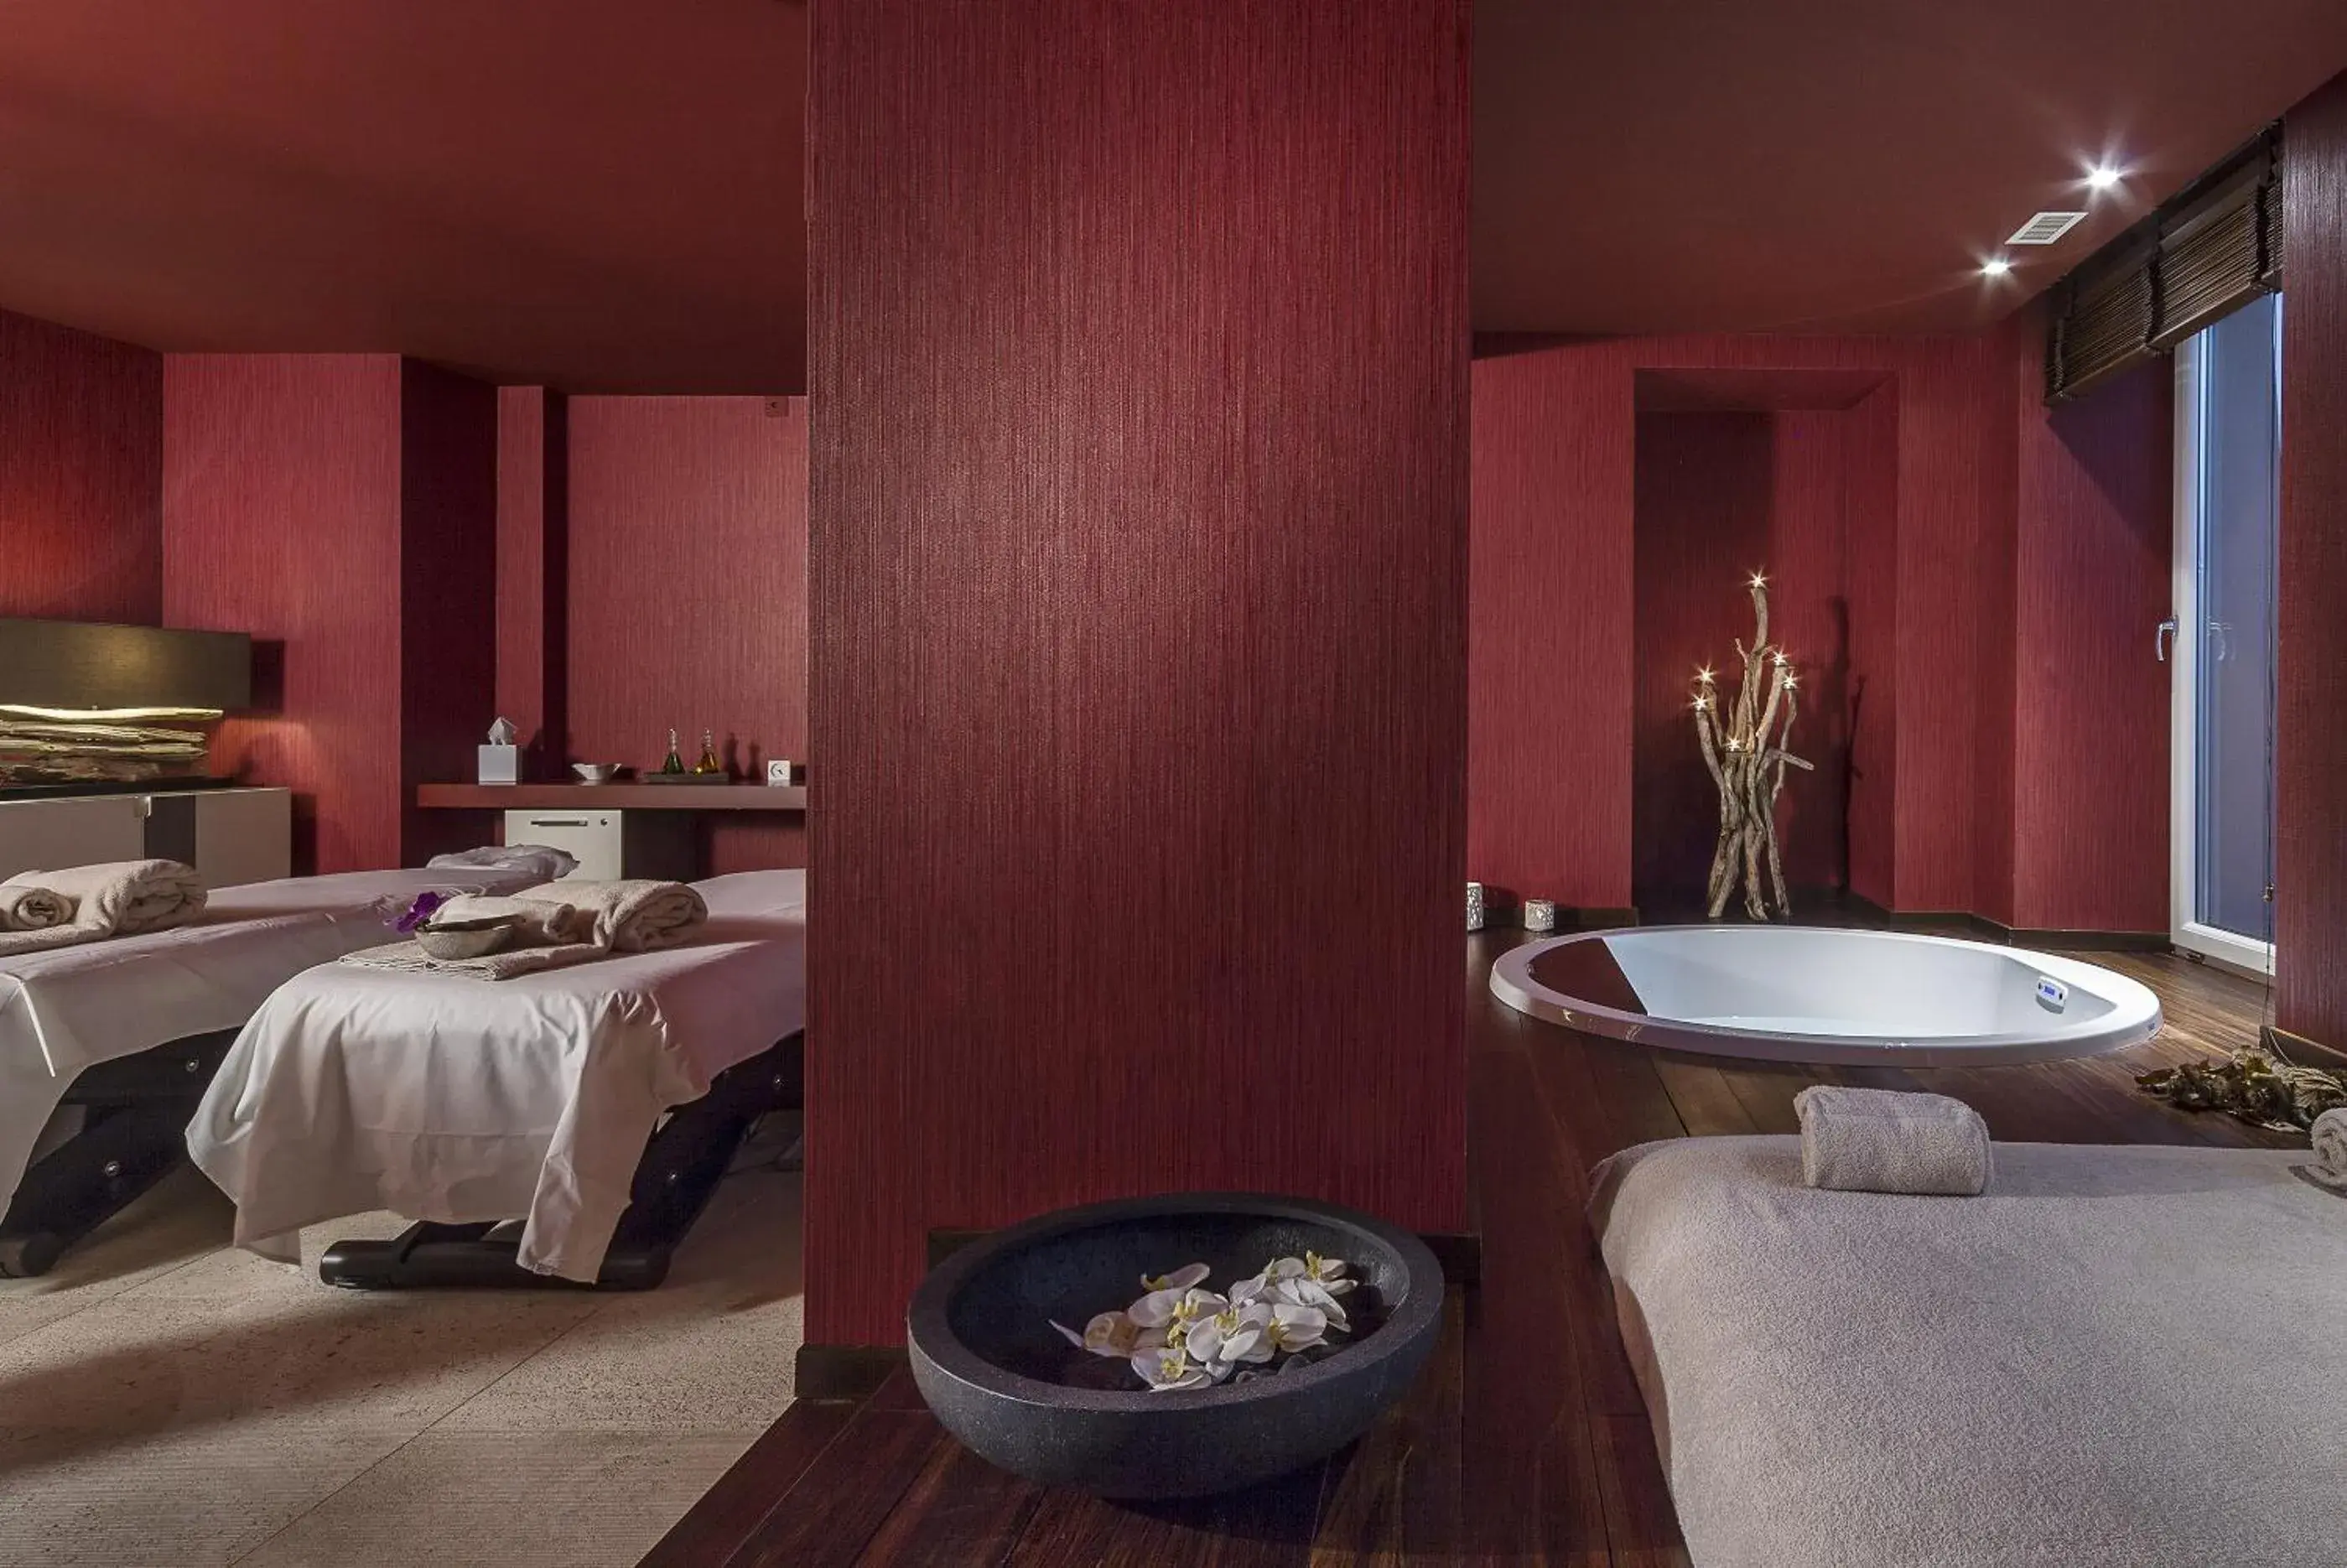 Spa and wellness centre/facilities, Bathroom in Kurhaus Cademario Hotel & DOT Spa - Ticino Hotels Group